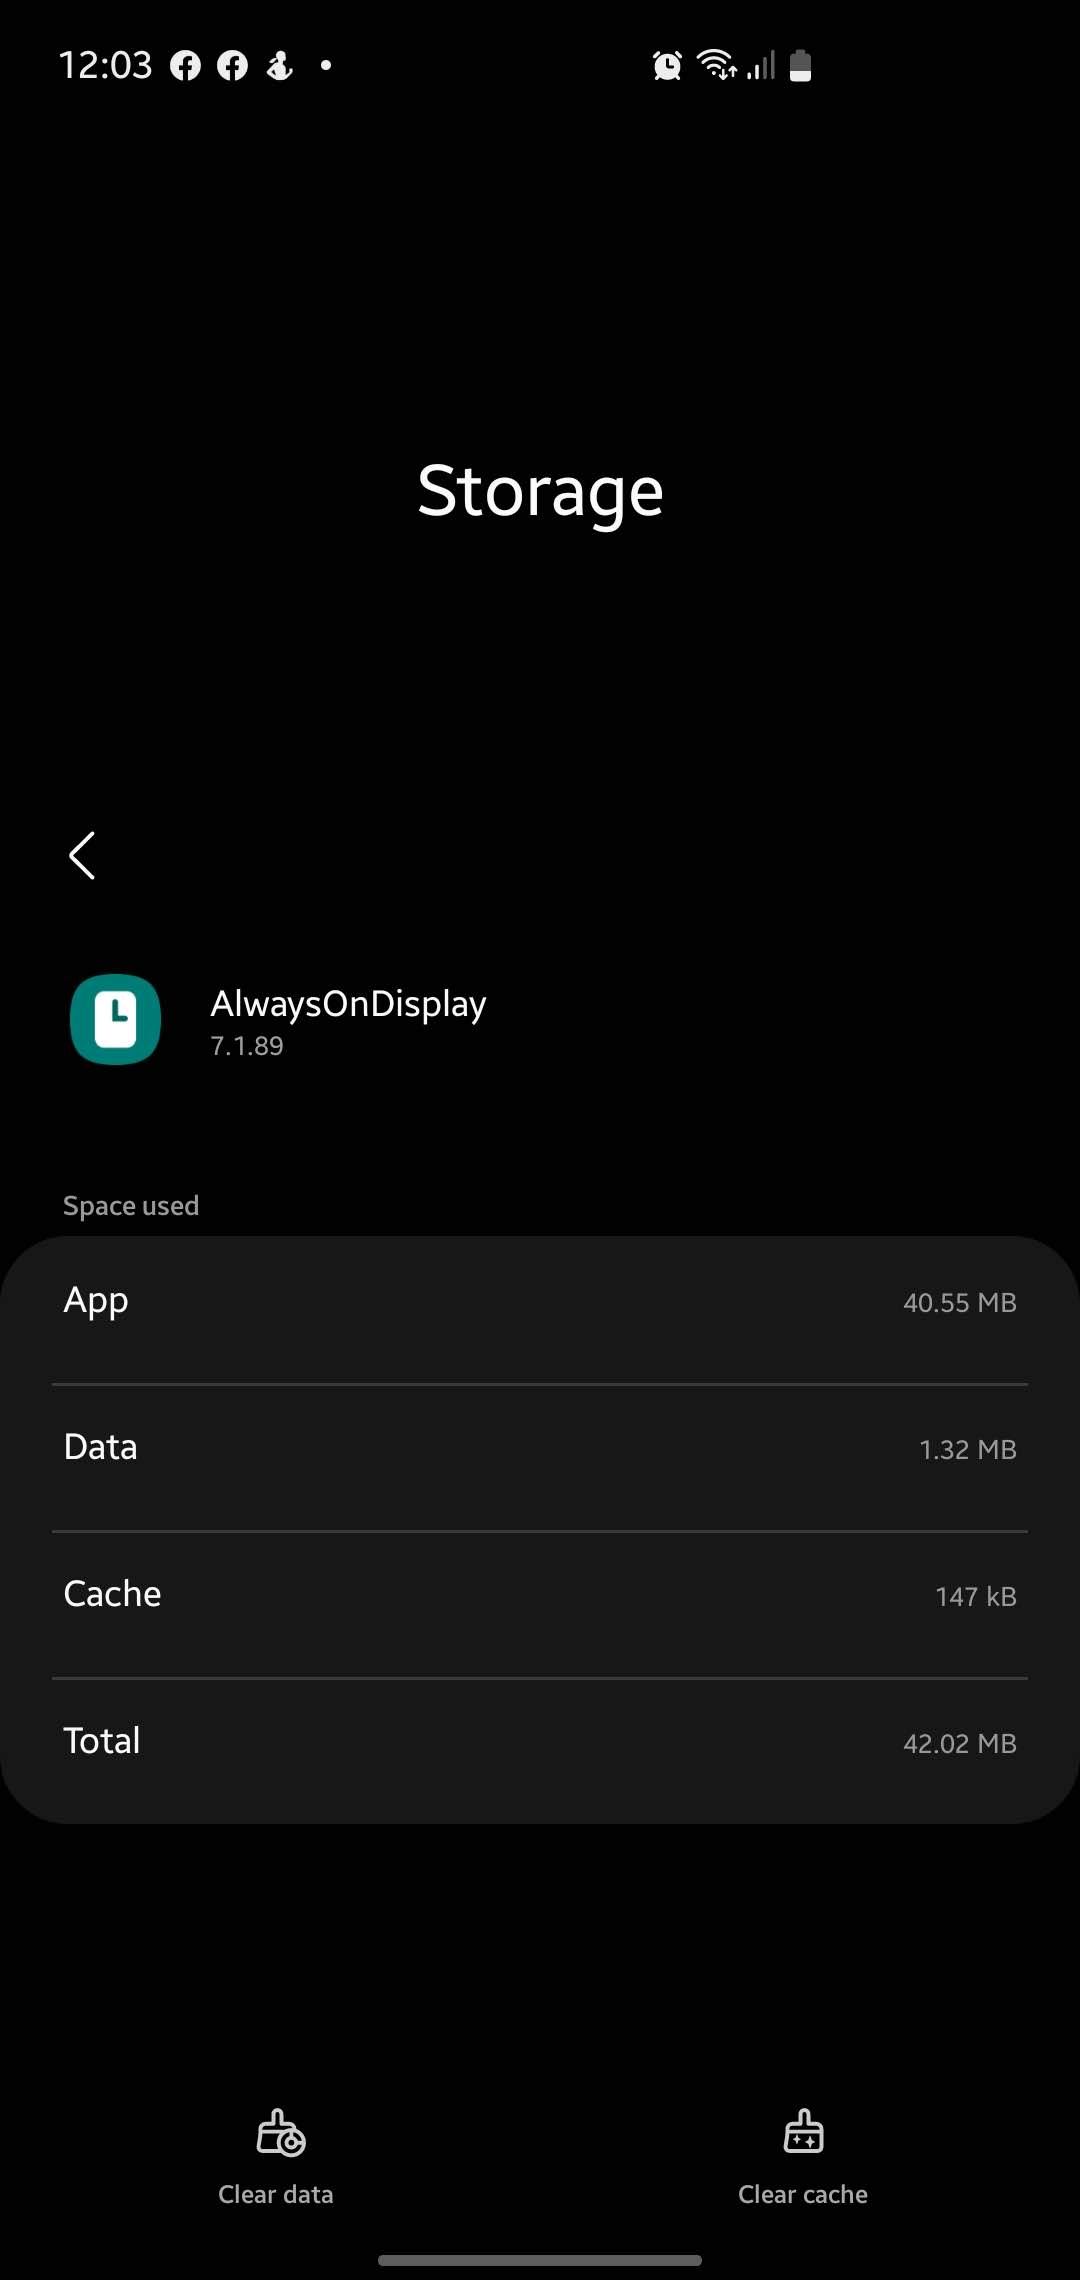 Storage info for Always On Display app on Samsung Phone